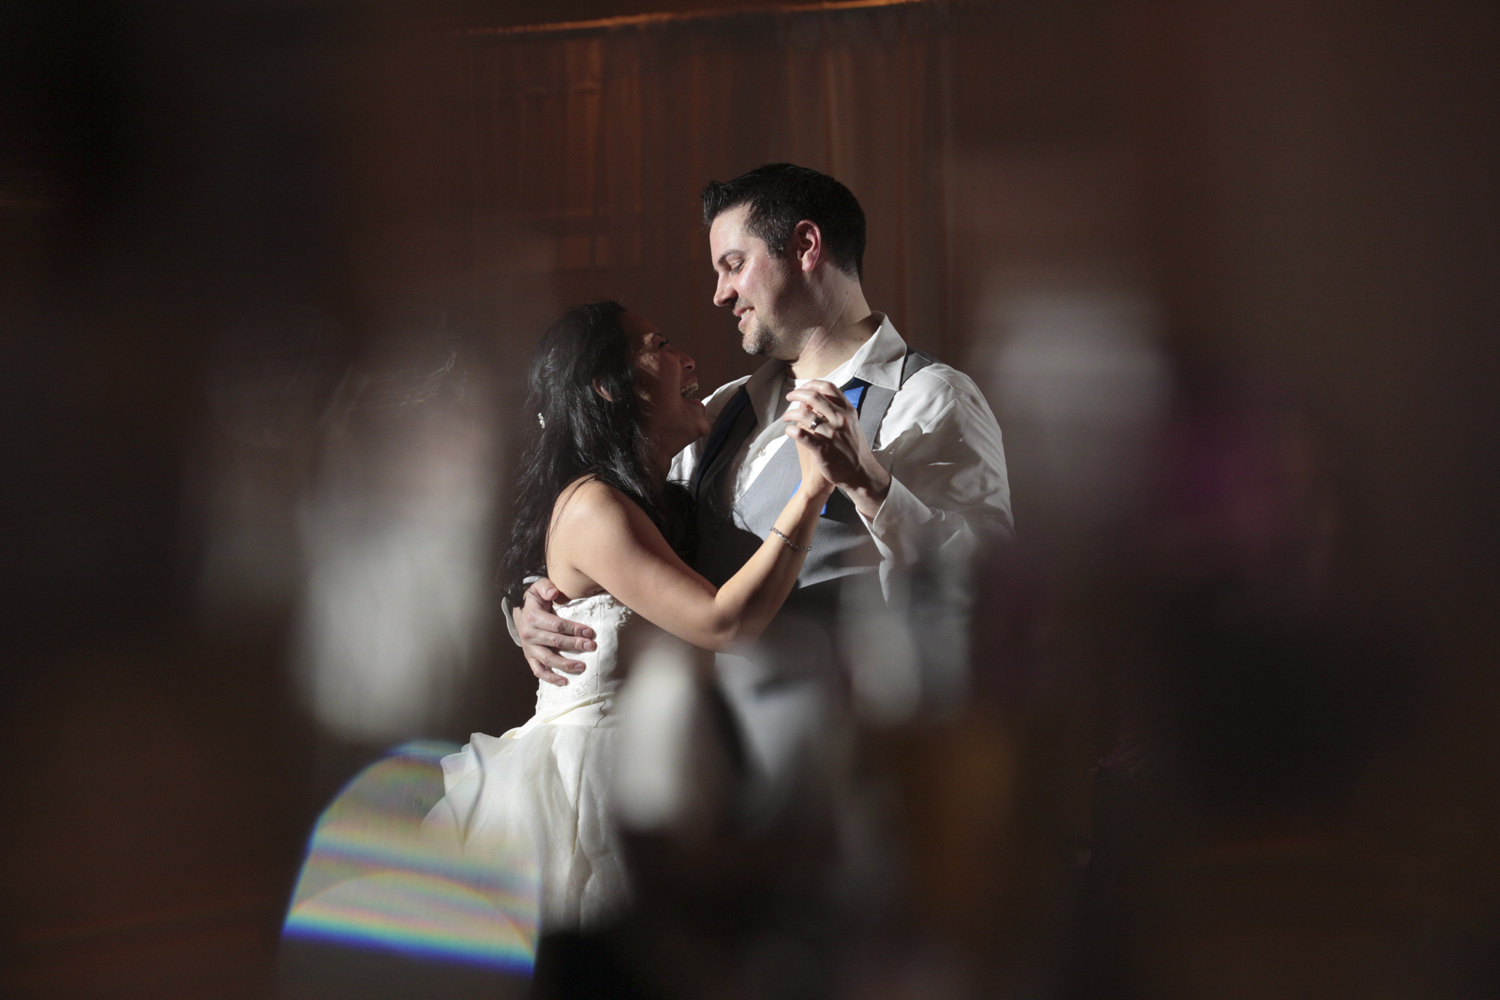 nba photographer jack arent dramatically lit dance floor wedding photo in san ramon  ca